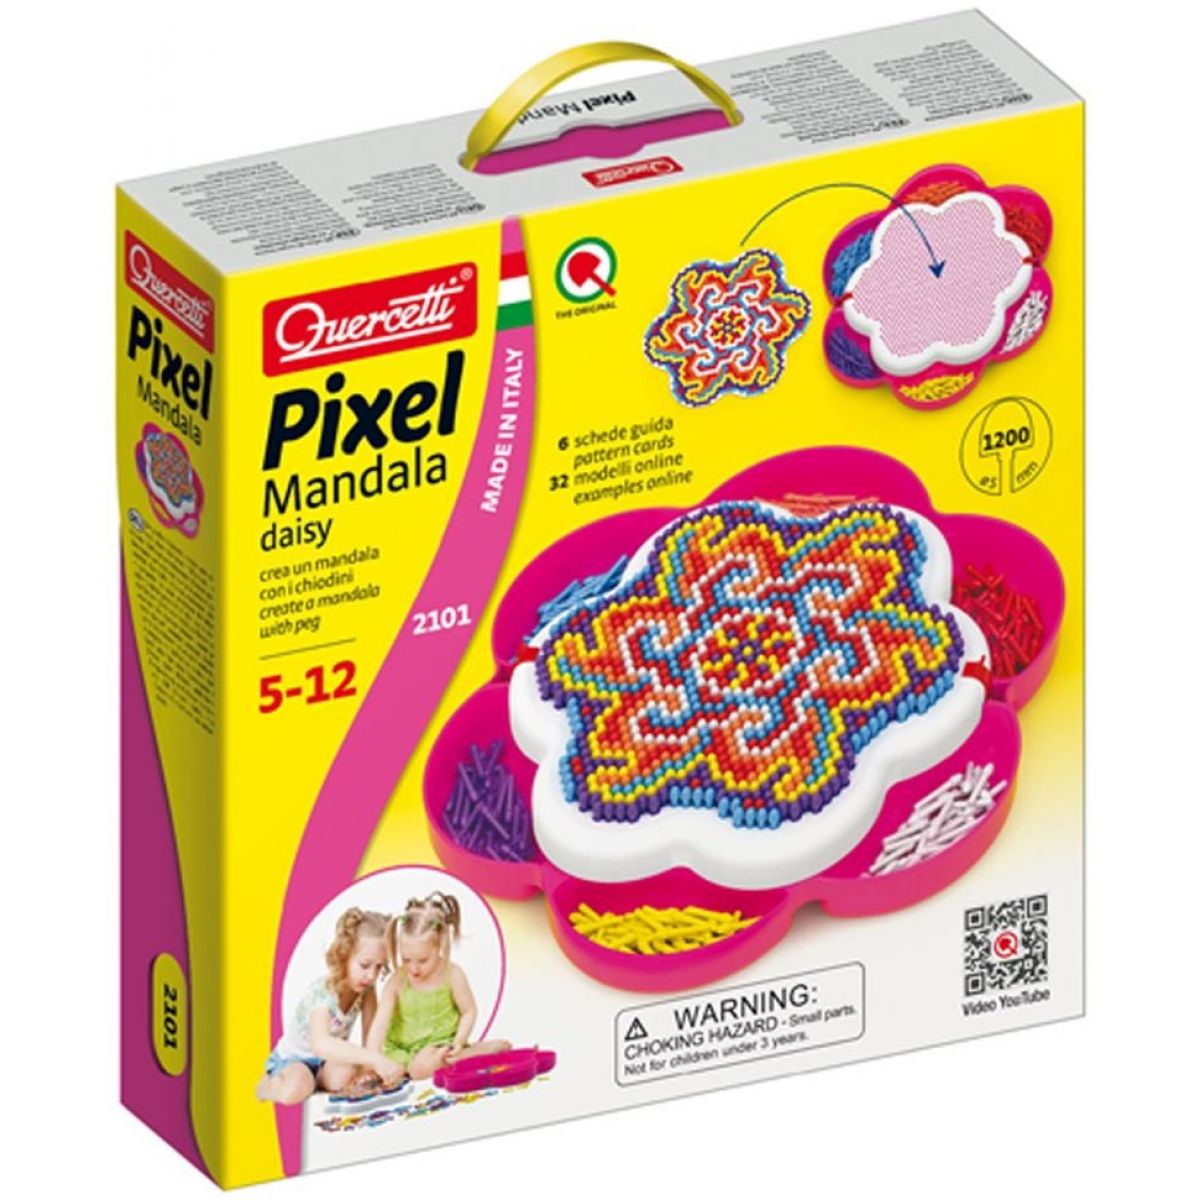 Mosaik-Steckspiel Pixel Mandala daisy Quercetti 2101 1200 Stecker 5mm 